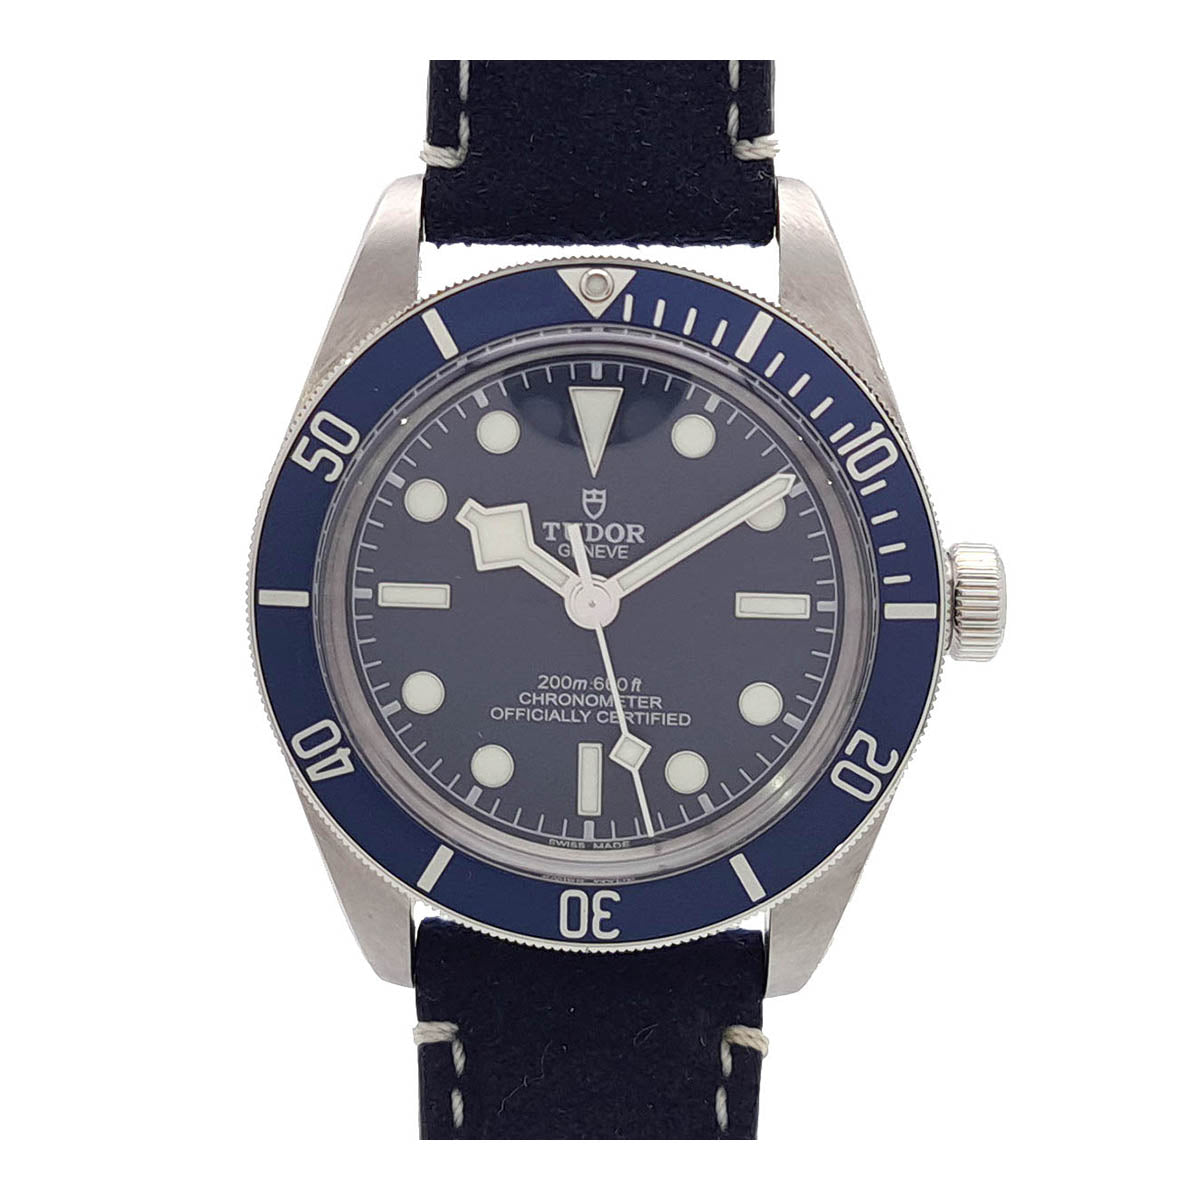 Automatic Heritage Black Bay Wrist Watch 79030B